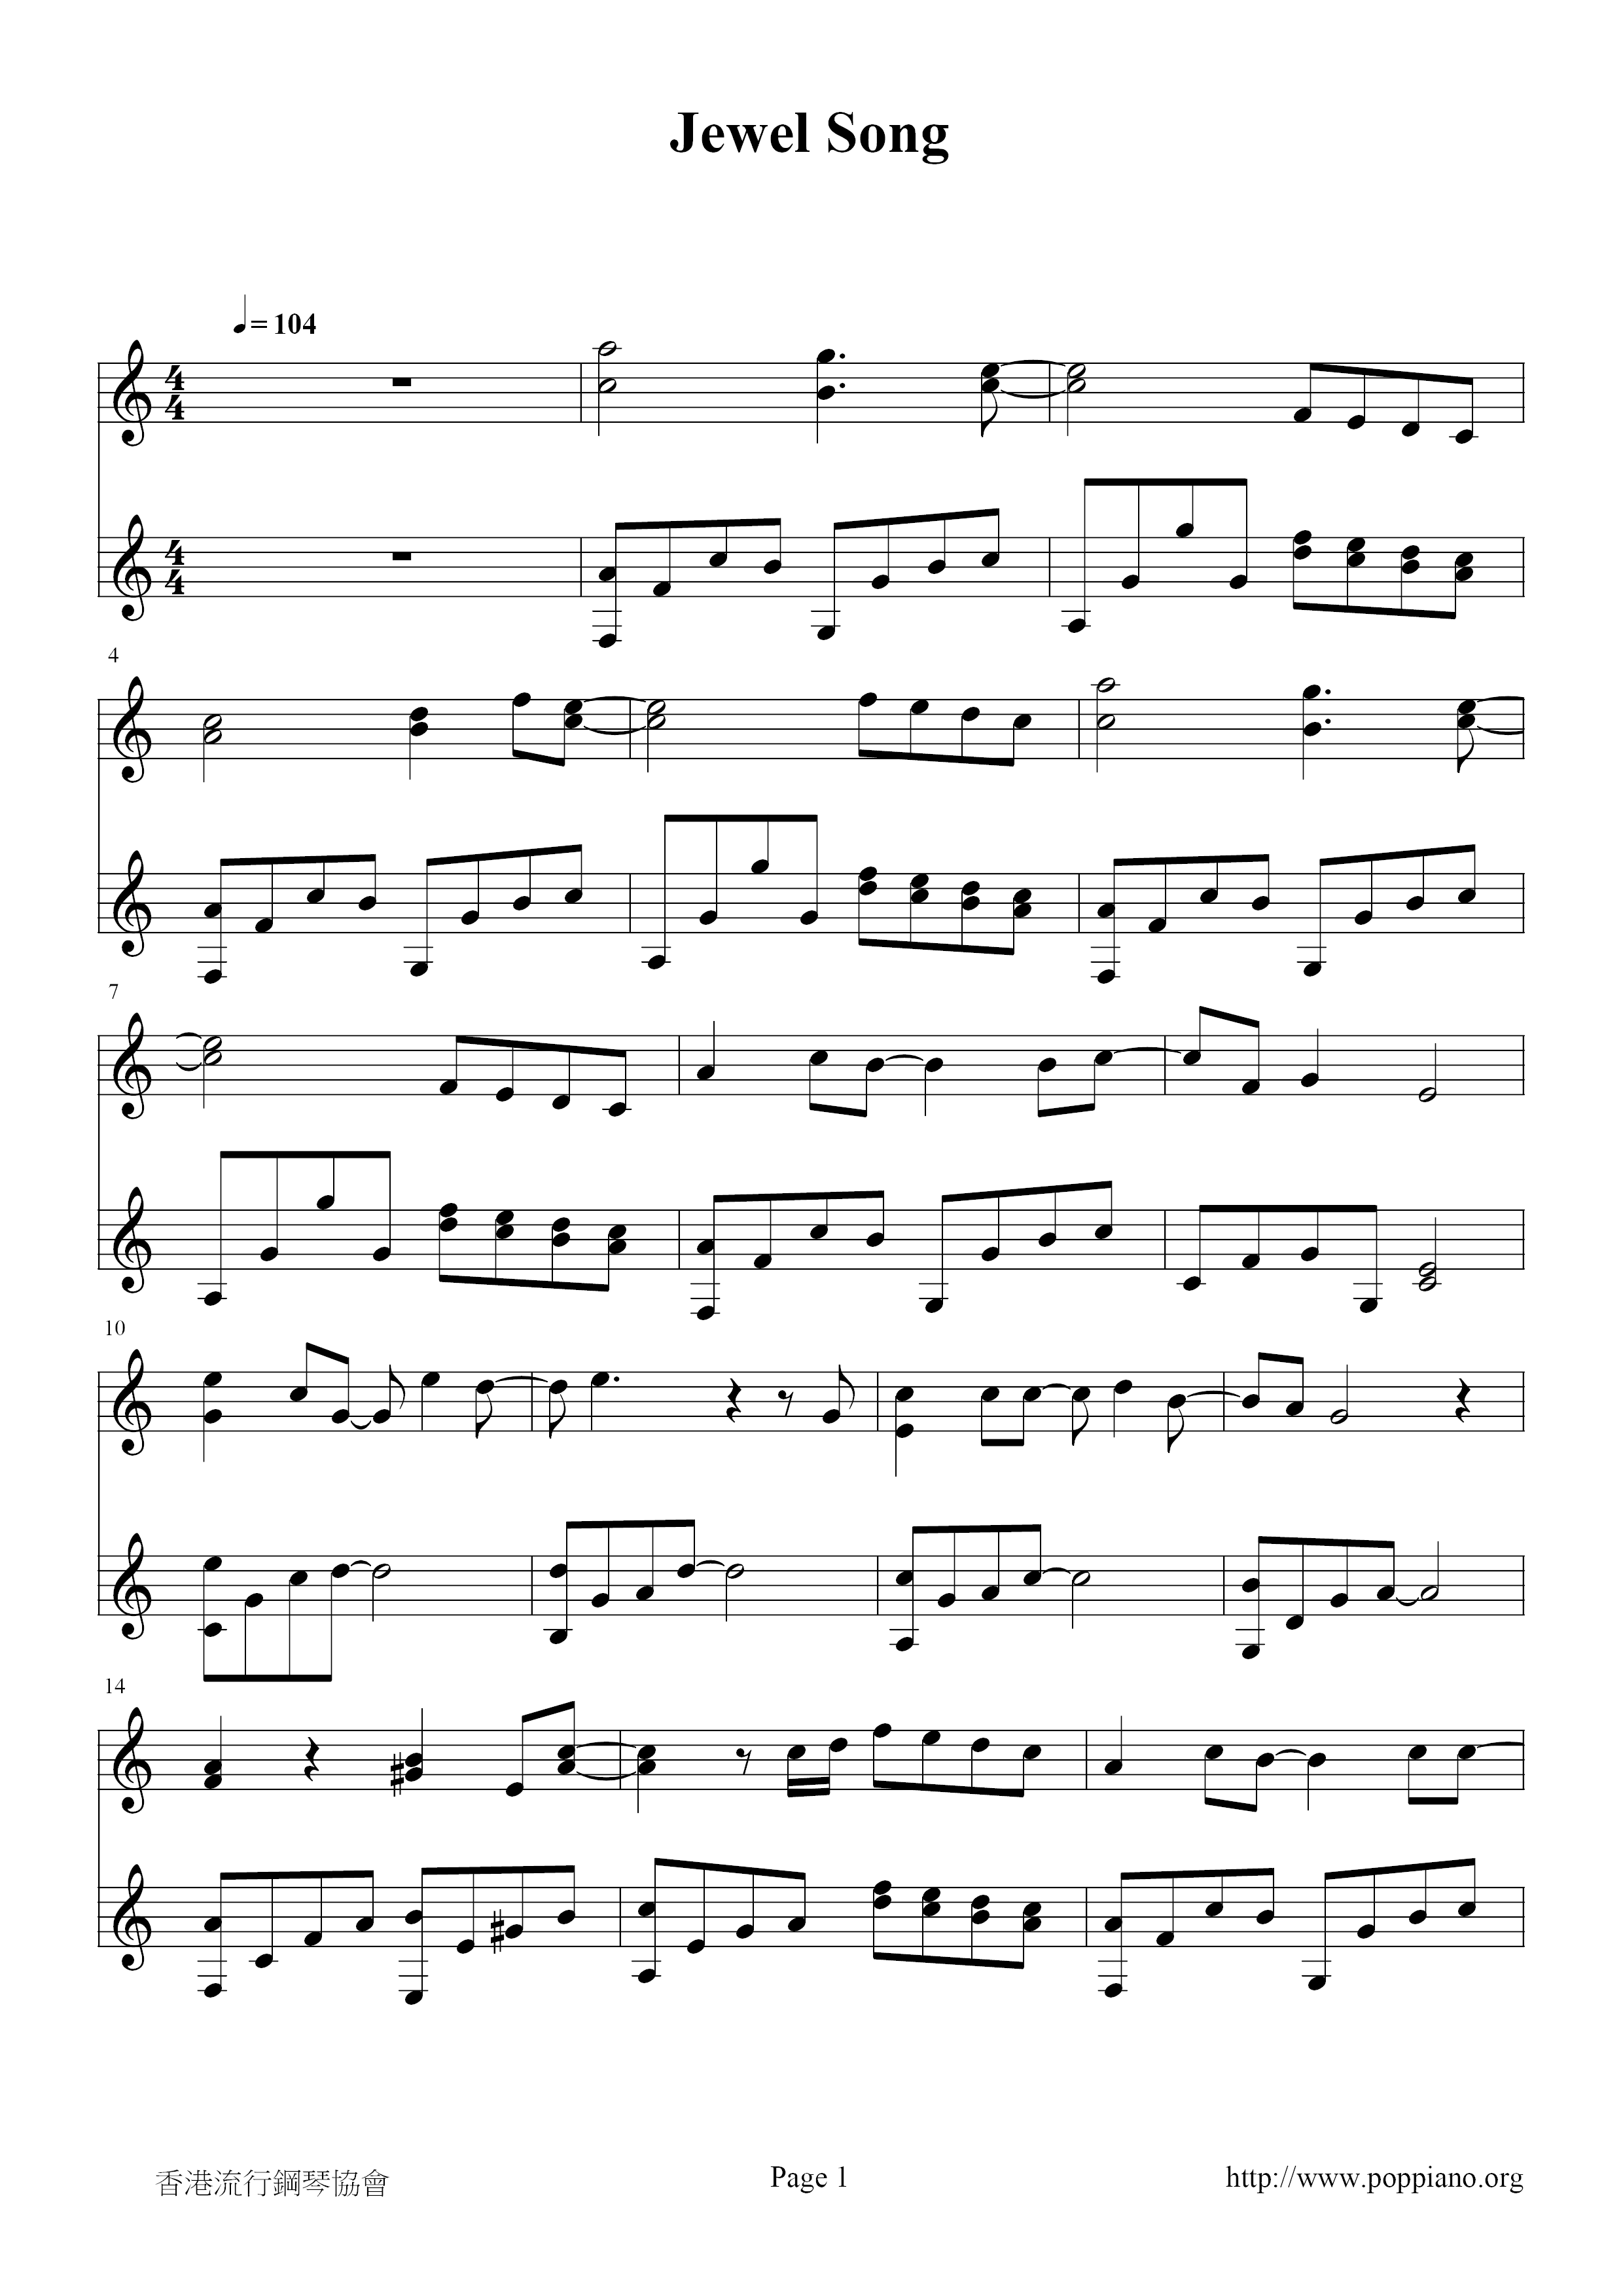 Jewel Song Score